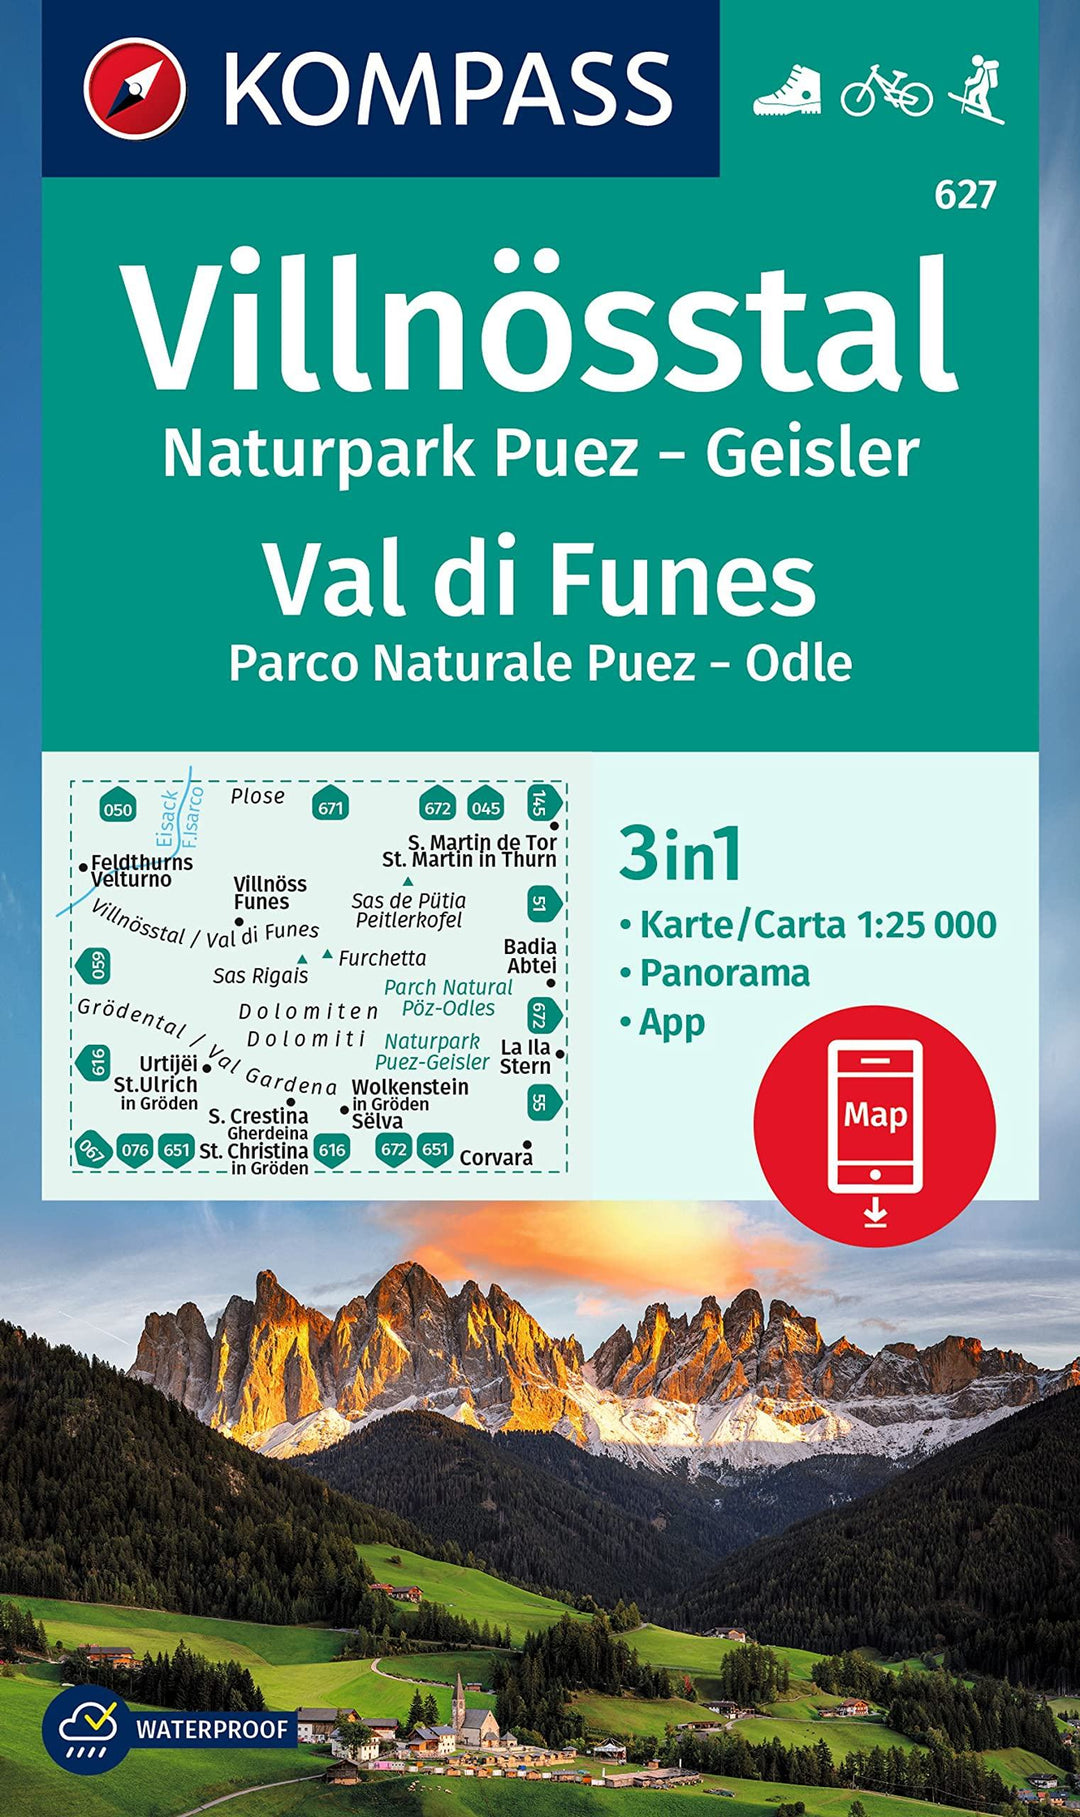 Hiking Map # 627 - Villnösstal, Val di Funes (Italy) | Kompass